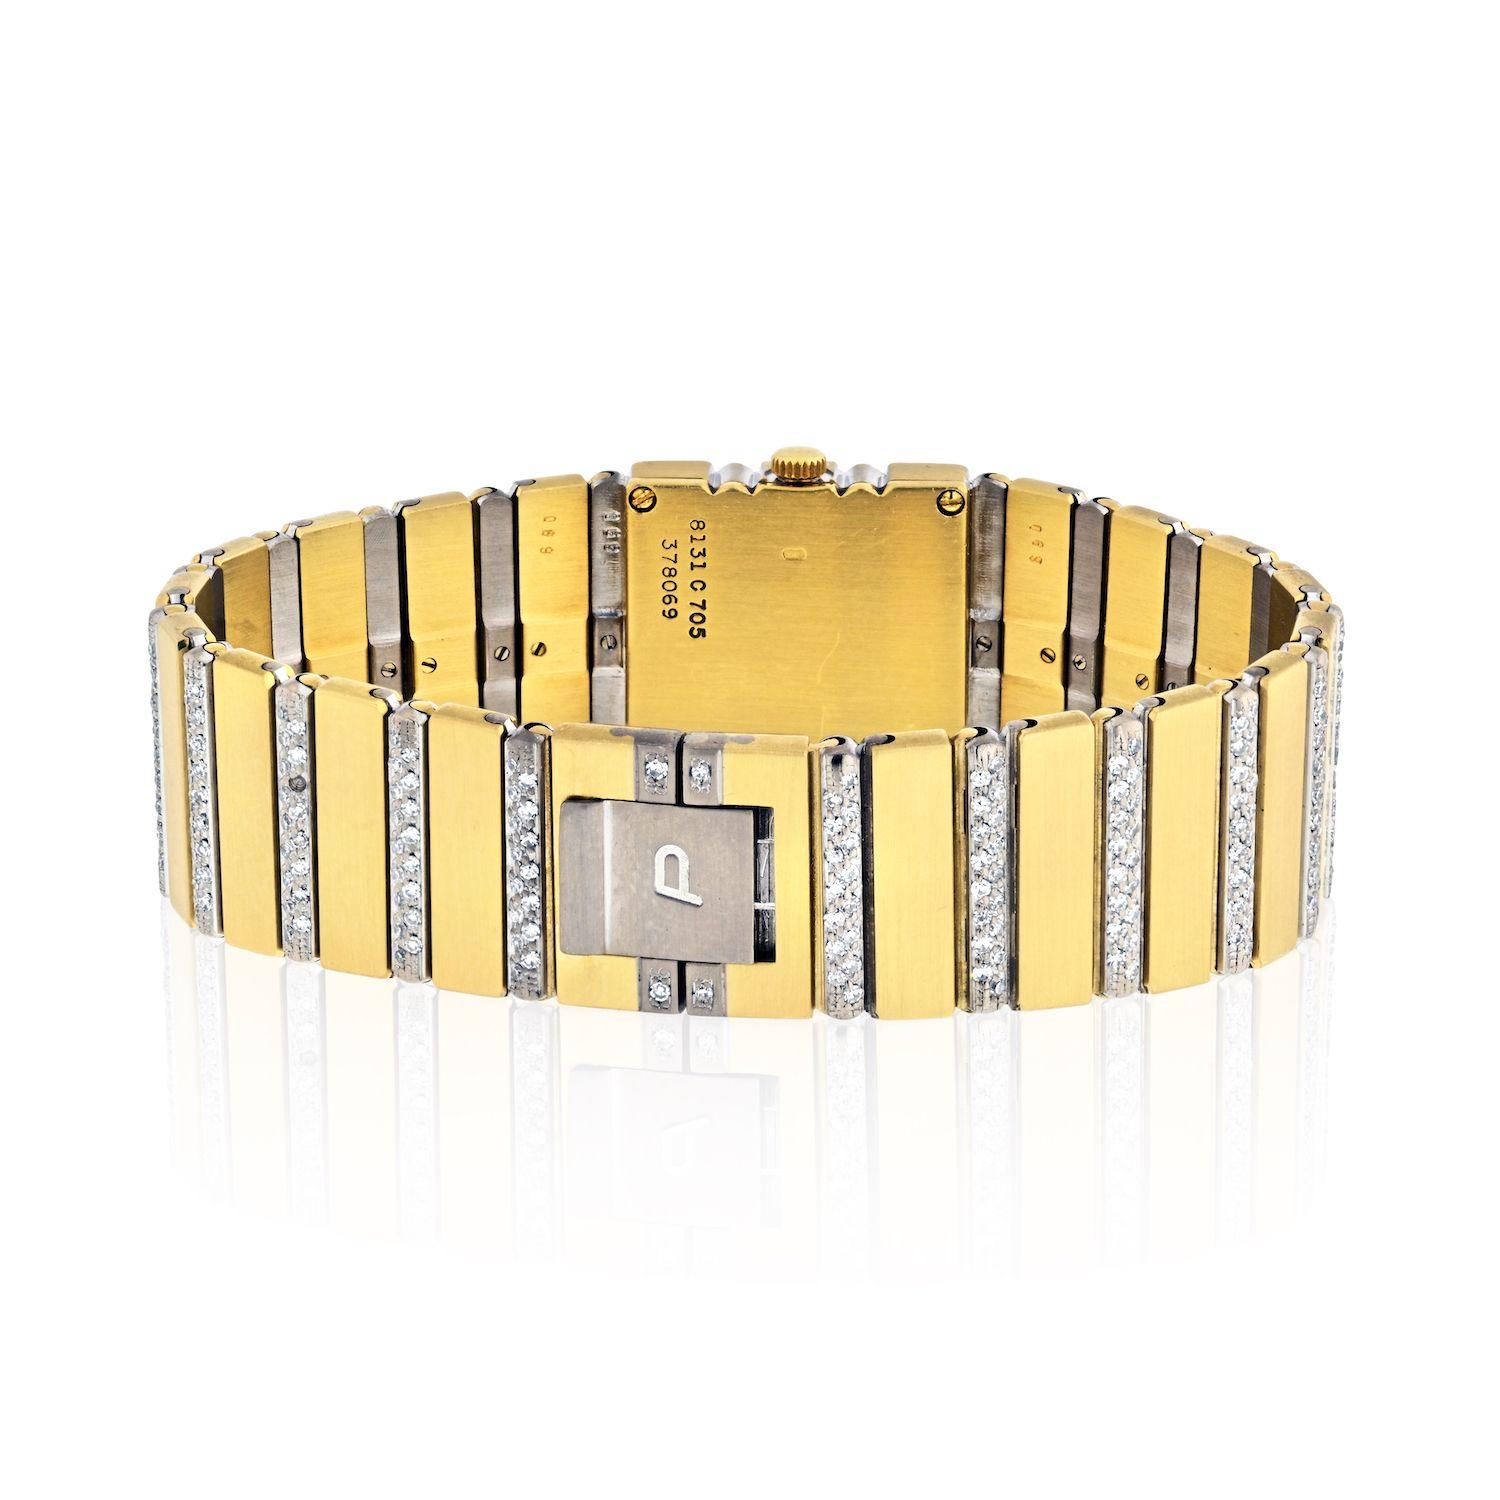 Piaget Polo 18K Yellow Gold Ladies Diamond Watch. 
Quartz movement. 
Bracelet: 6.5 inches. 
Case width: 20mm
Original diamonds. 